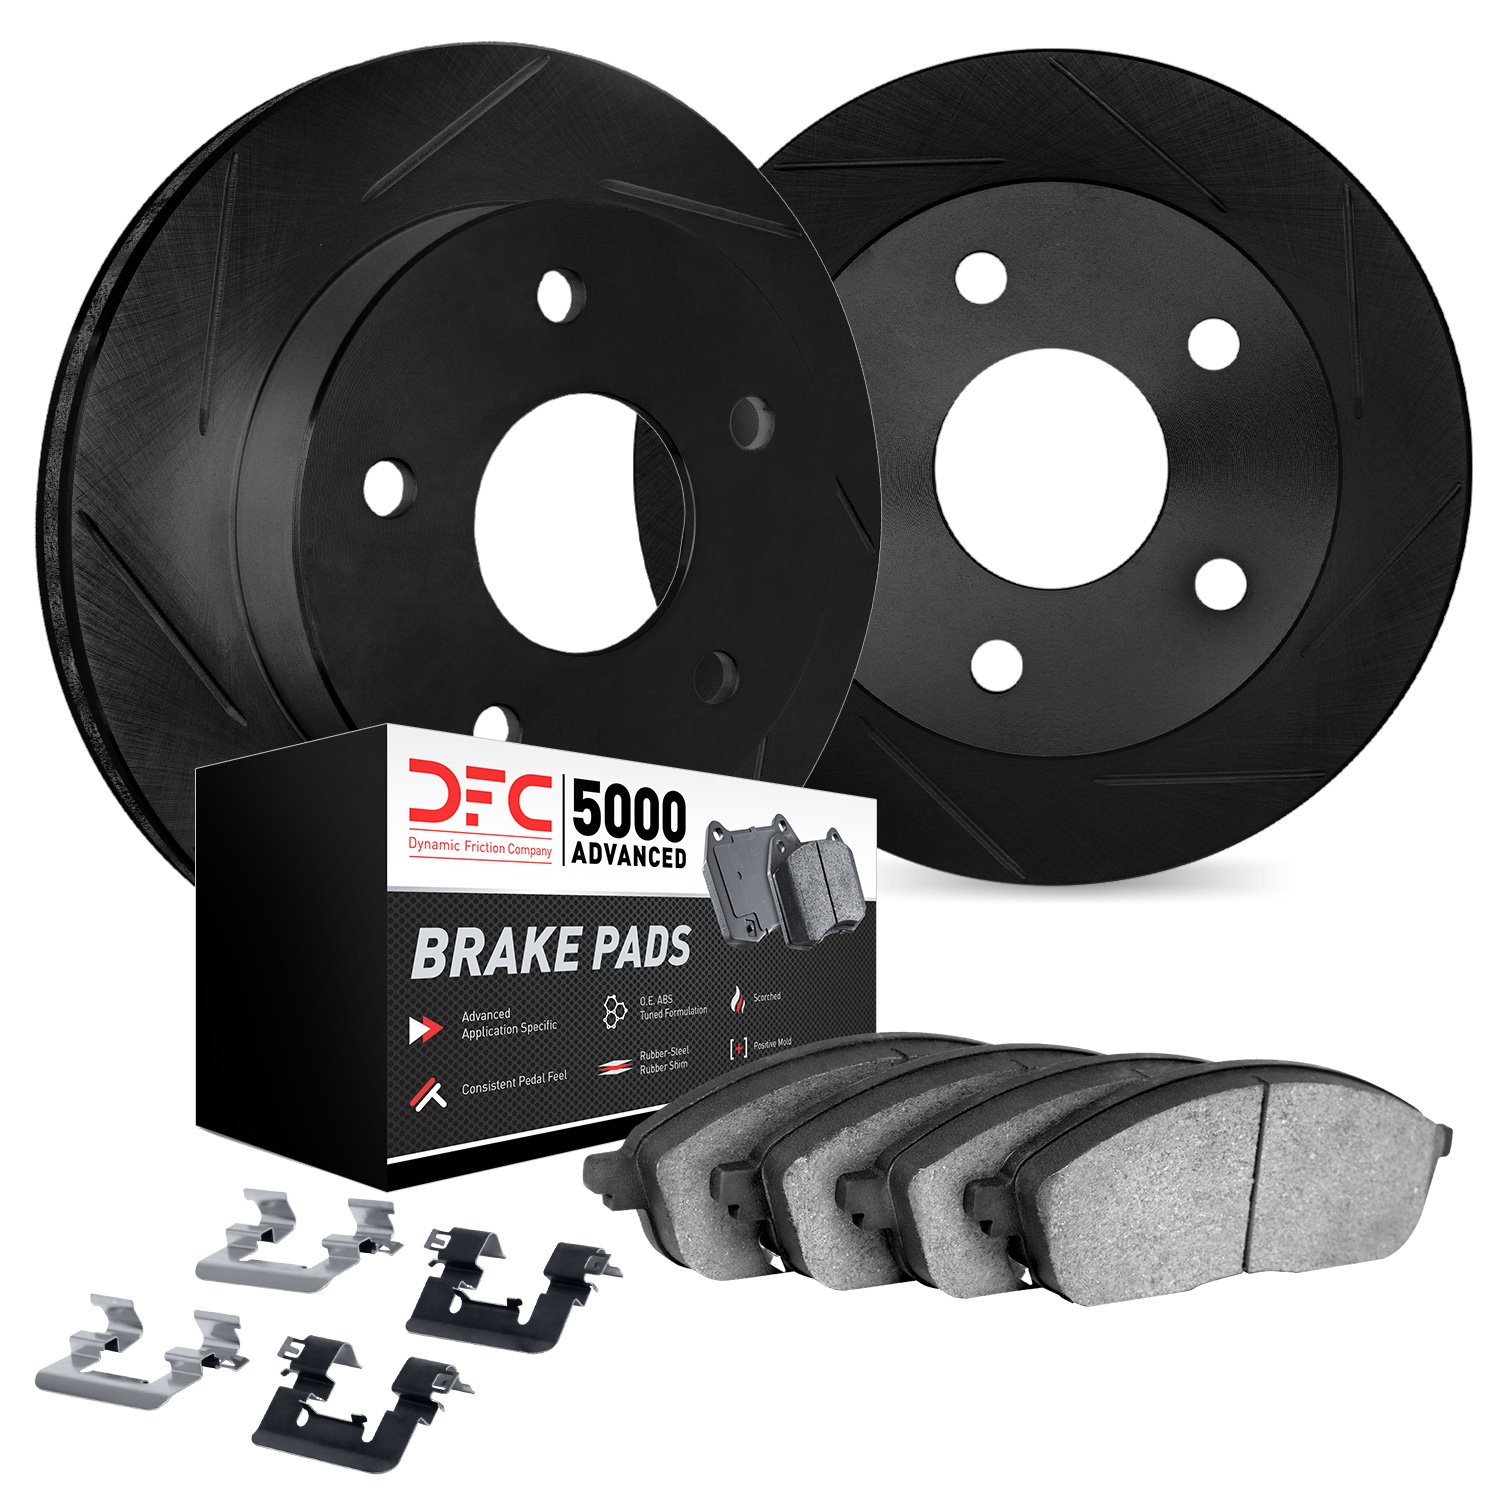 3512-54215 Slotted Brake Rotors w/5000 Advanced Brake Pads Kit & Hardware [Black], 2013-2019 Ford/Lincoln/Mercury/Mazda, Positio